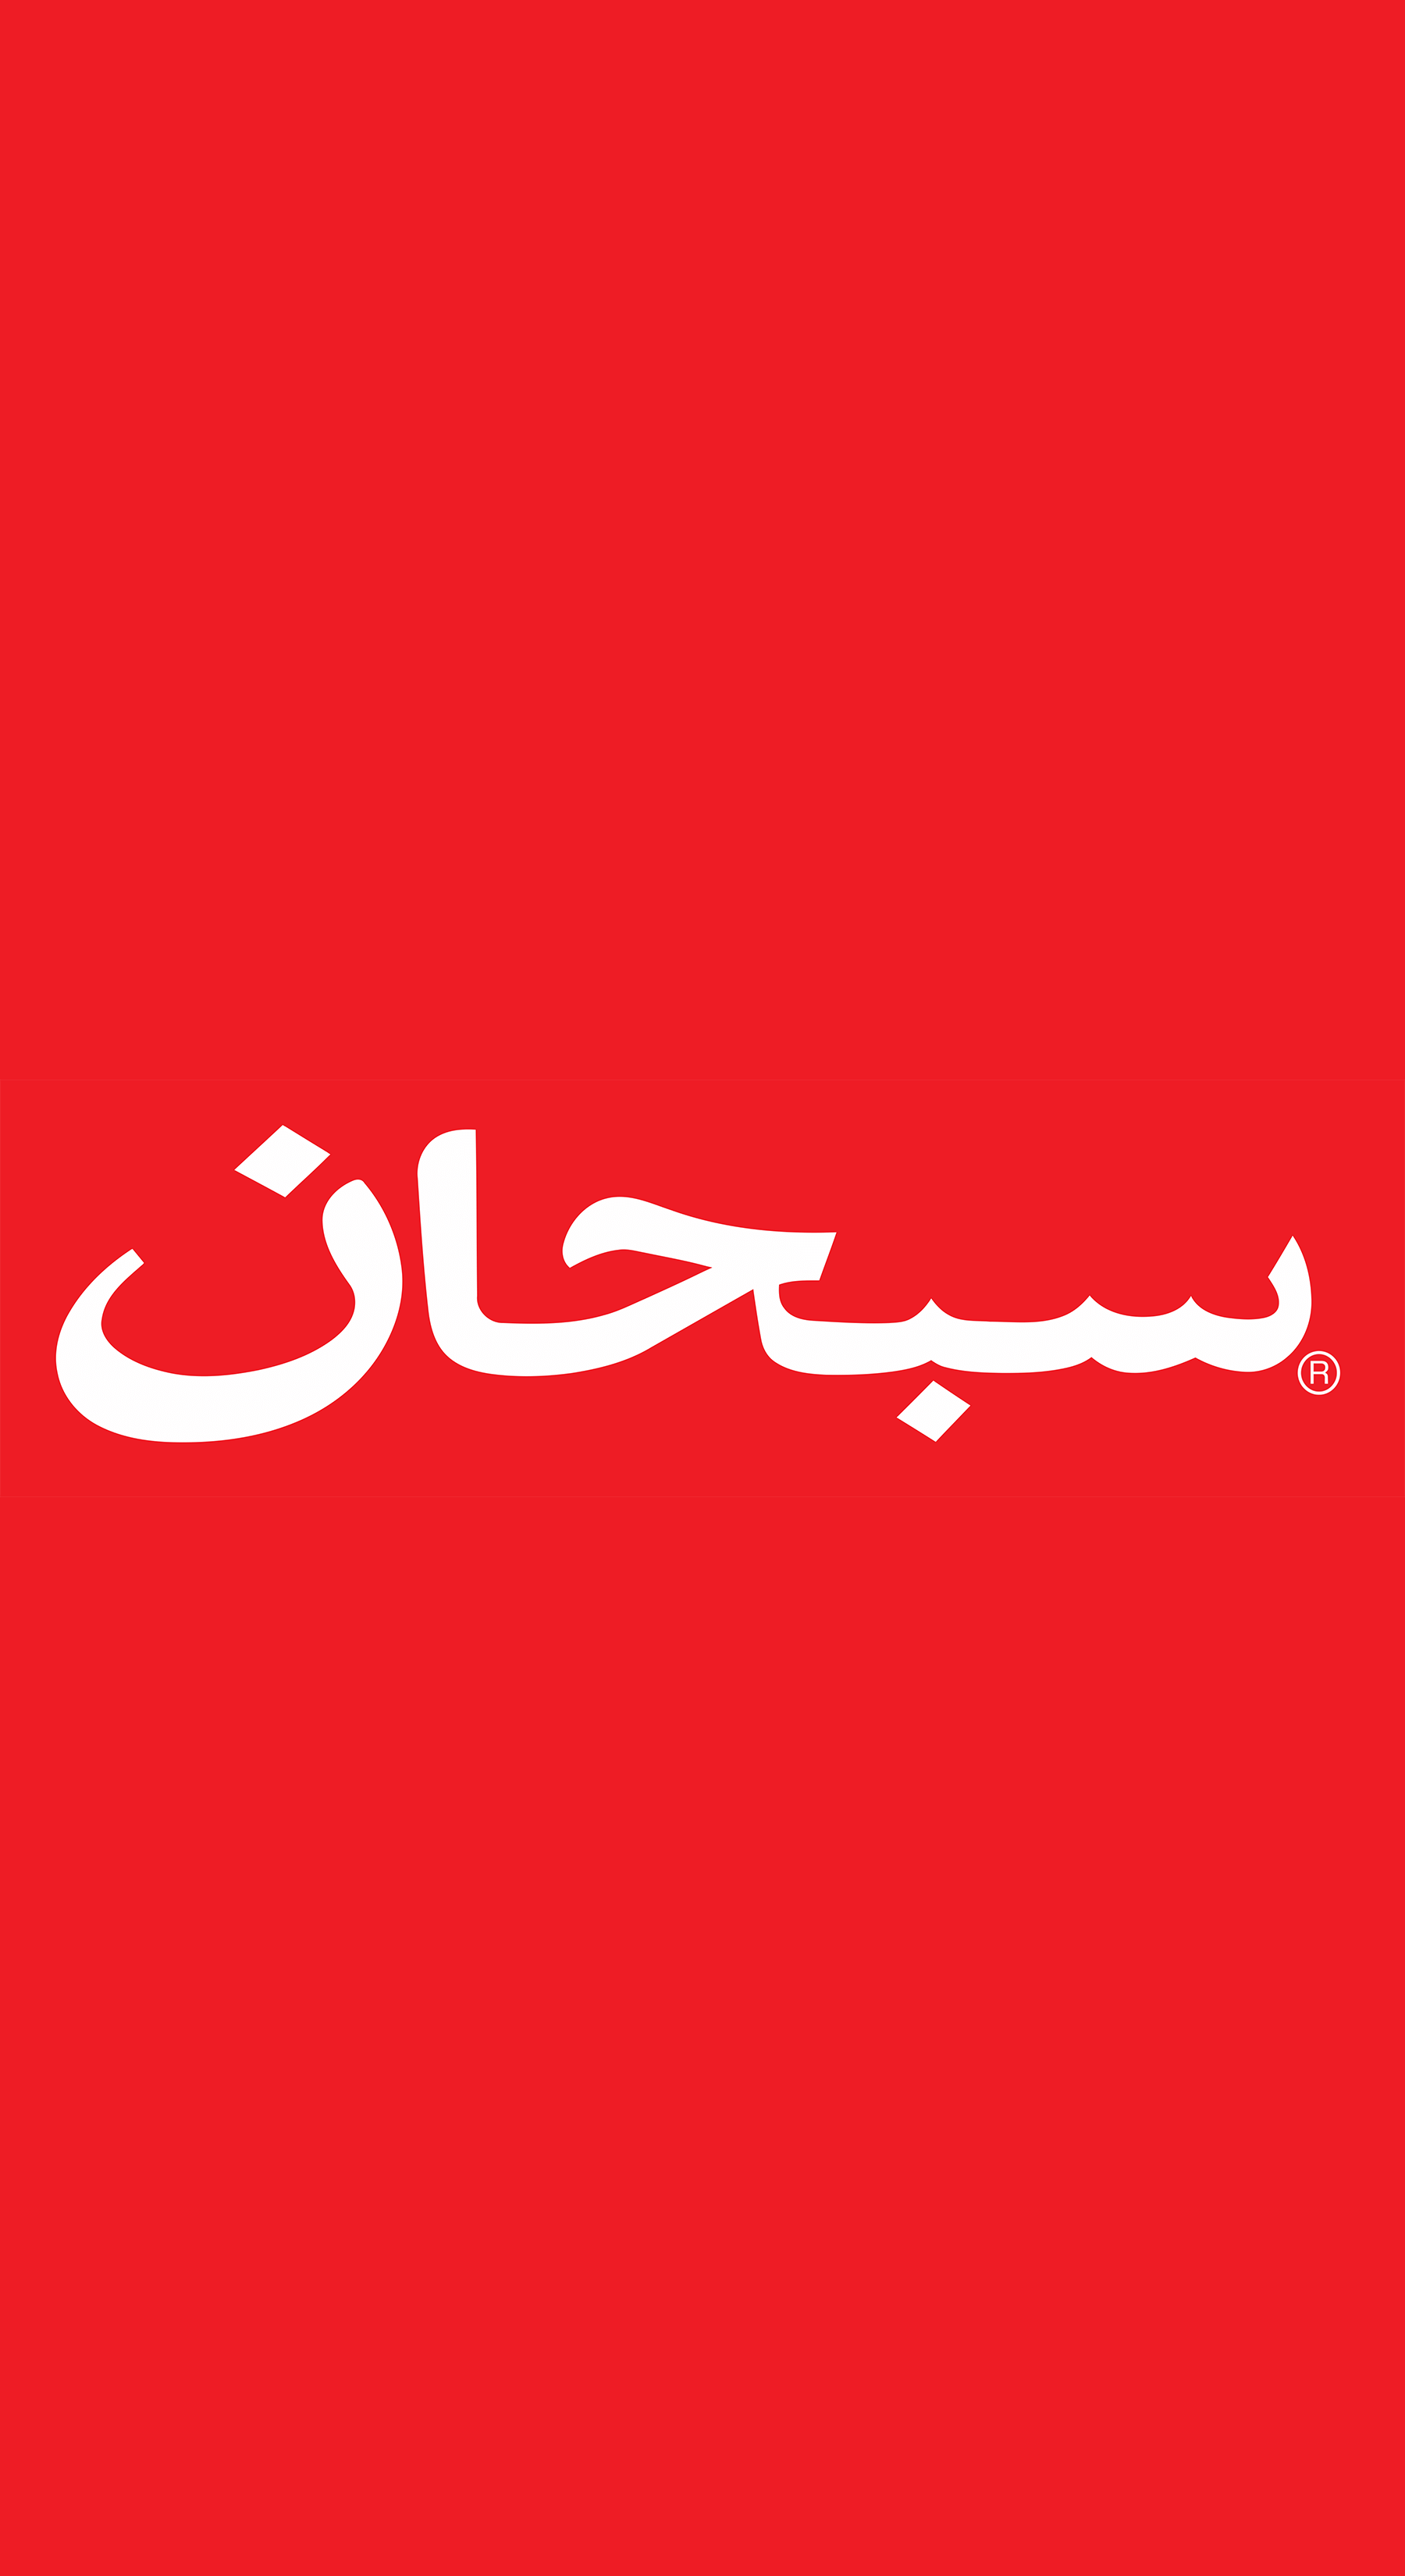 Supreme Arabic logo, logotype